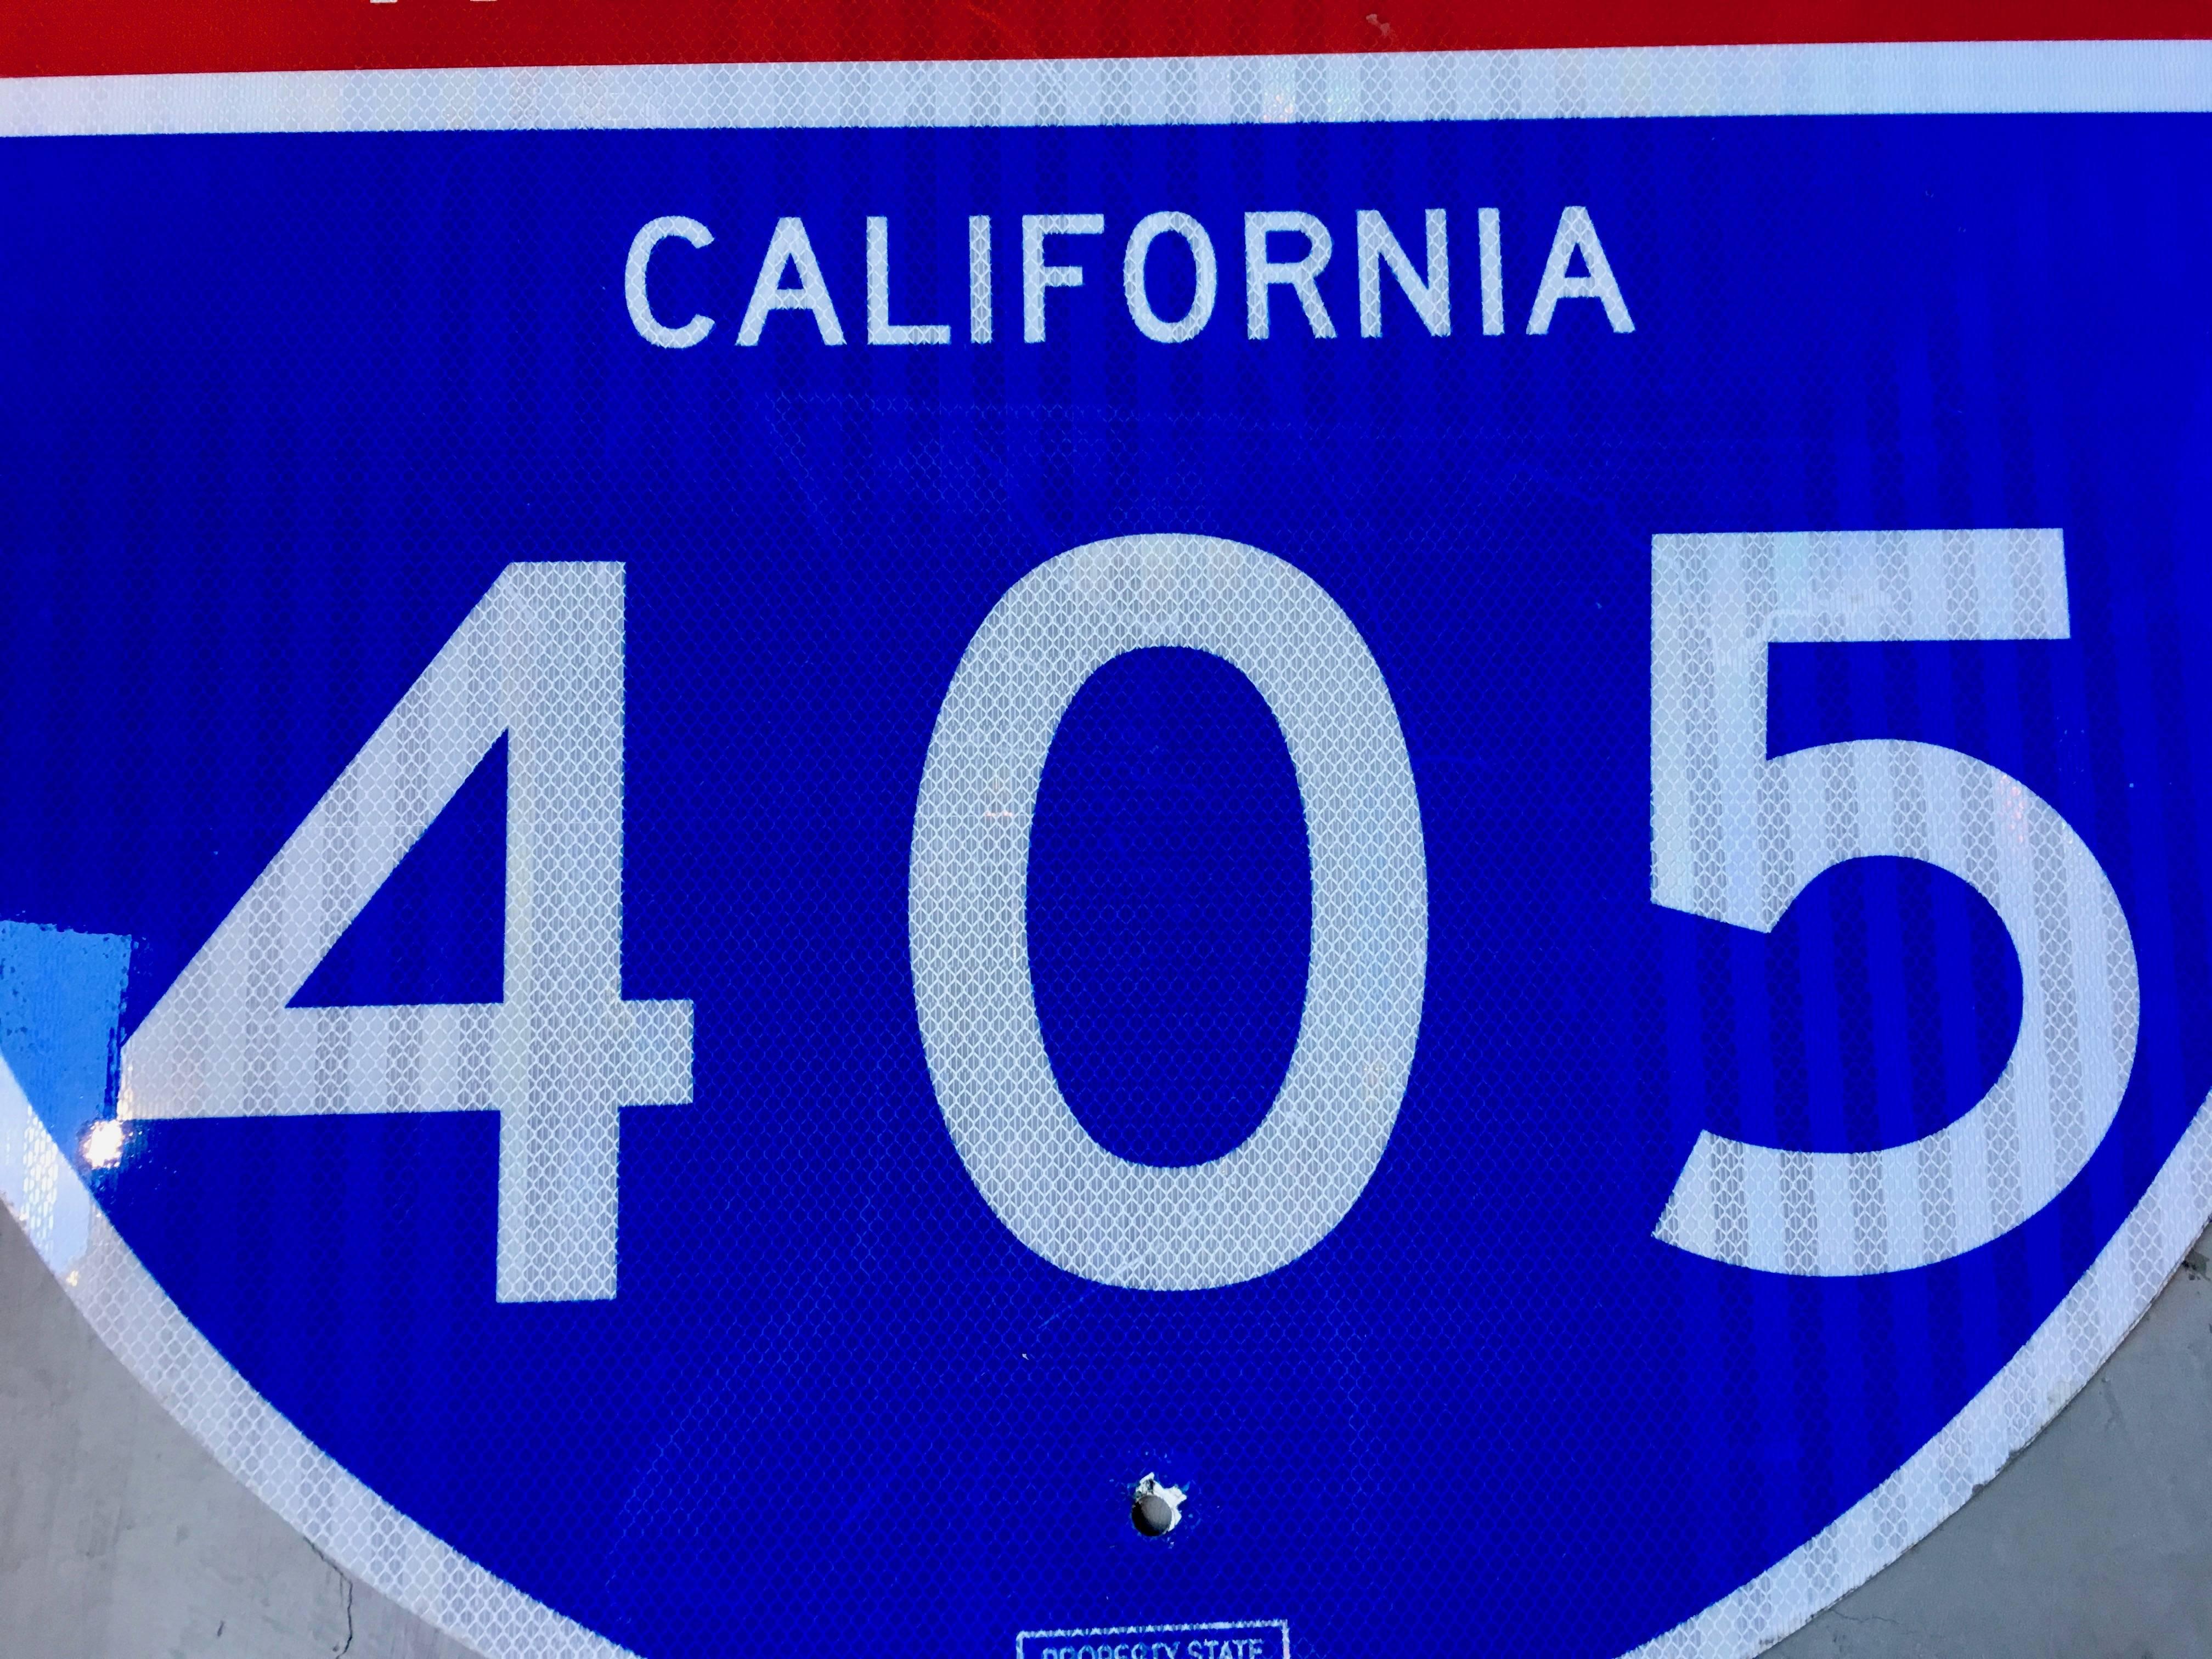 405 freeway signs